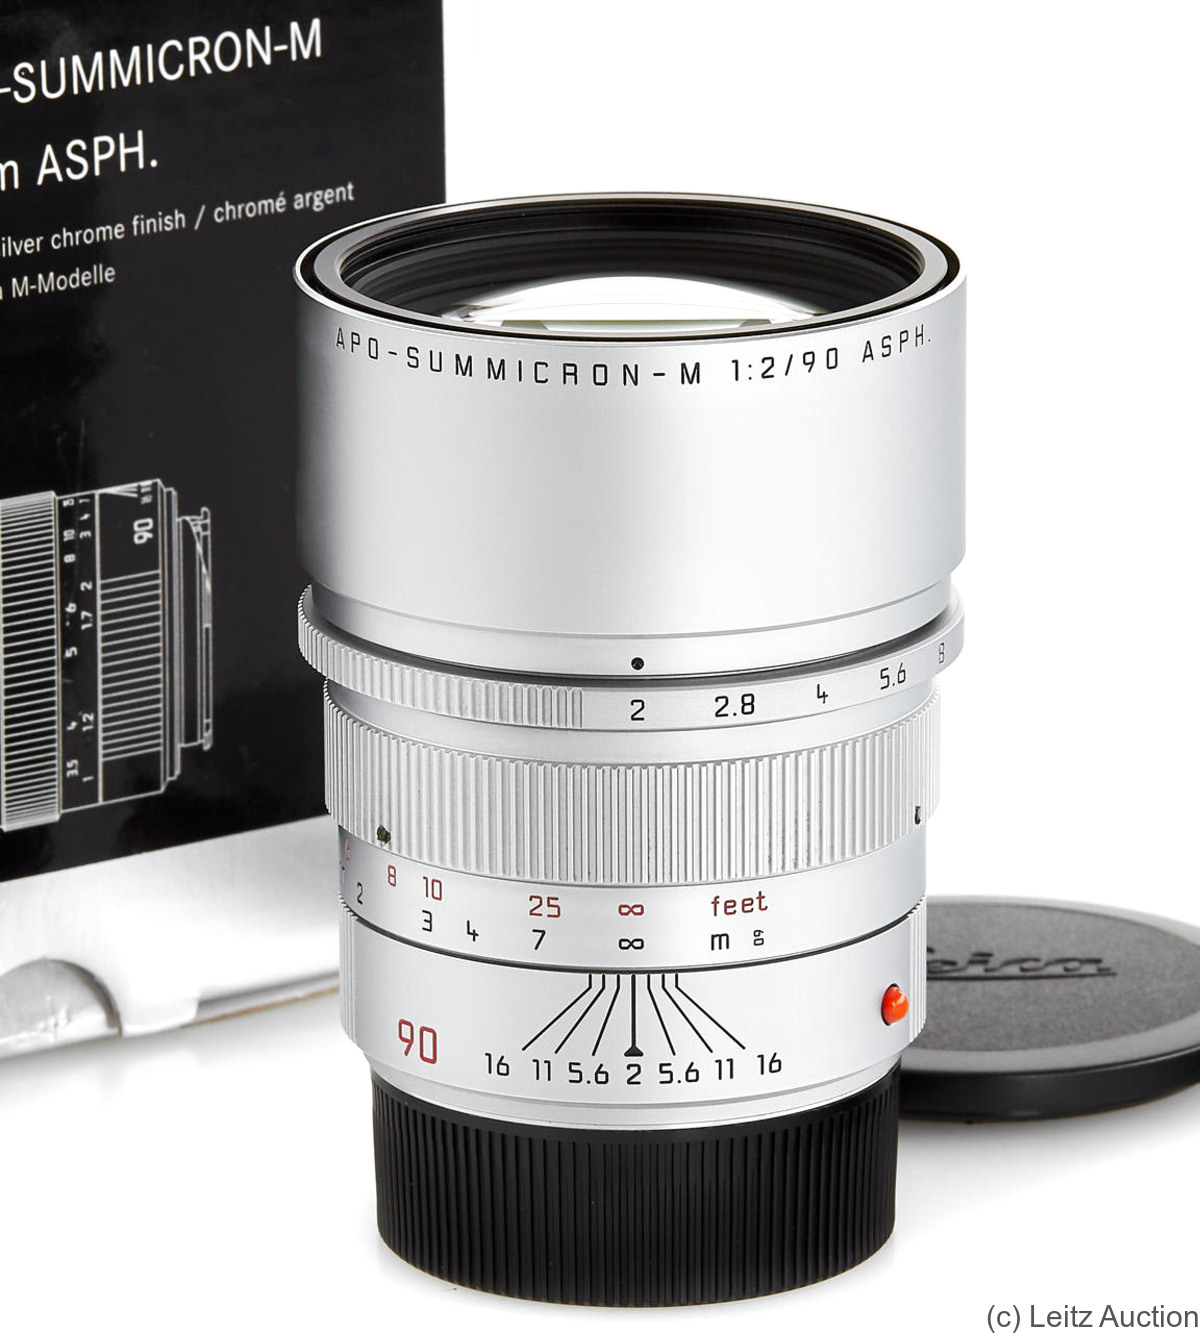 Leitz: 90mm (9cm) f2 Apo-Summicron-M (BM, chrome, asph) camera